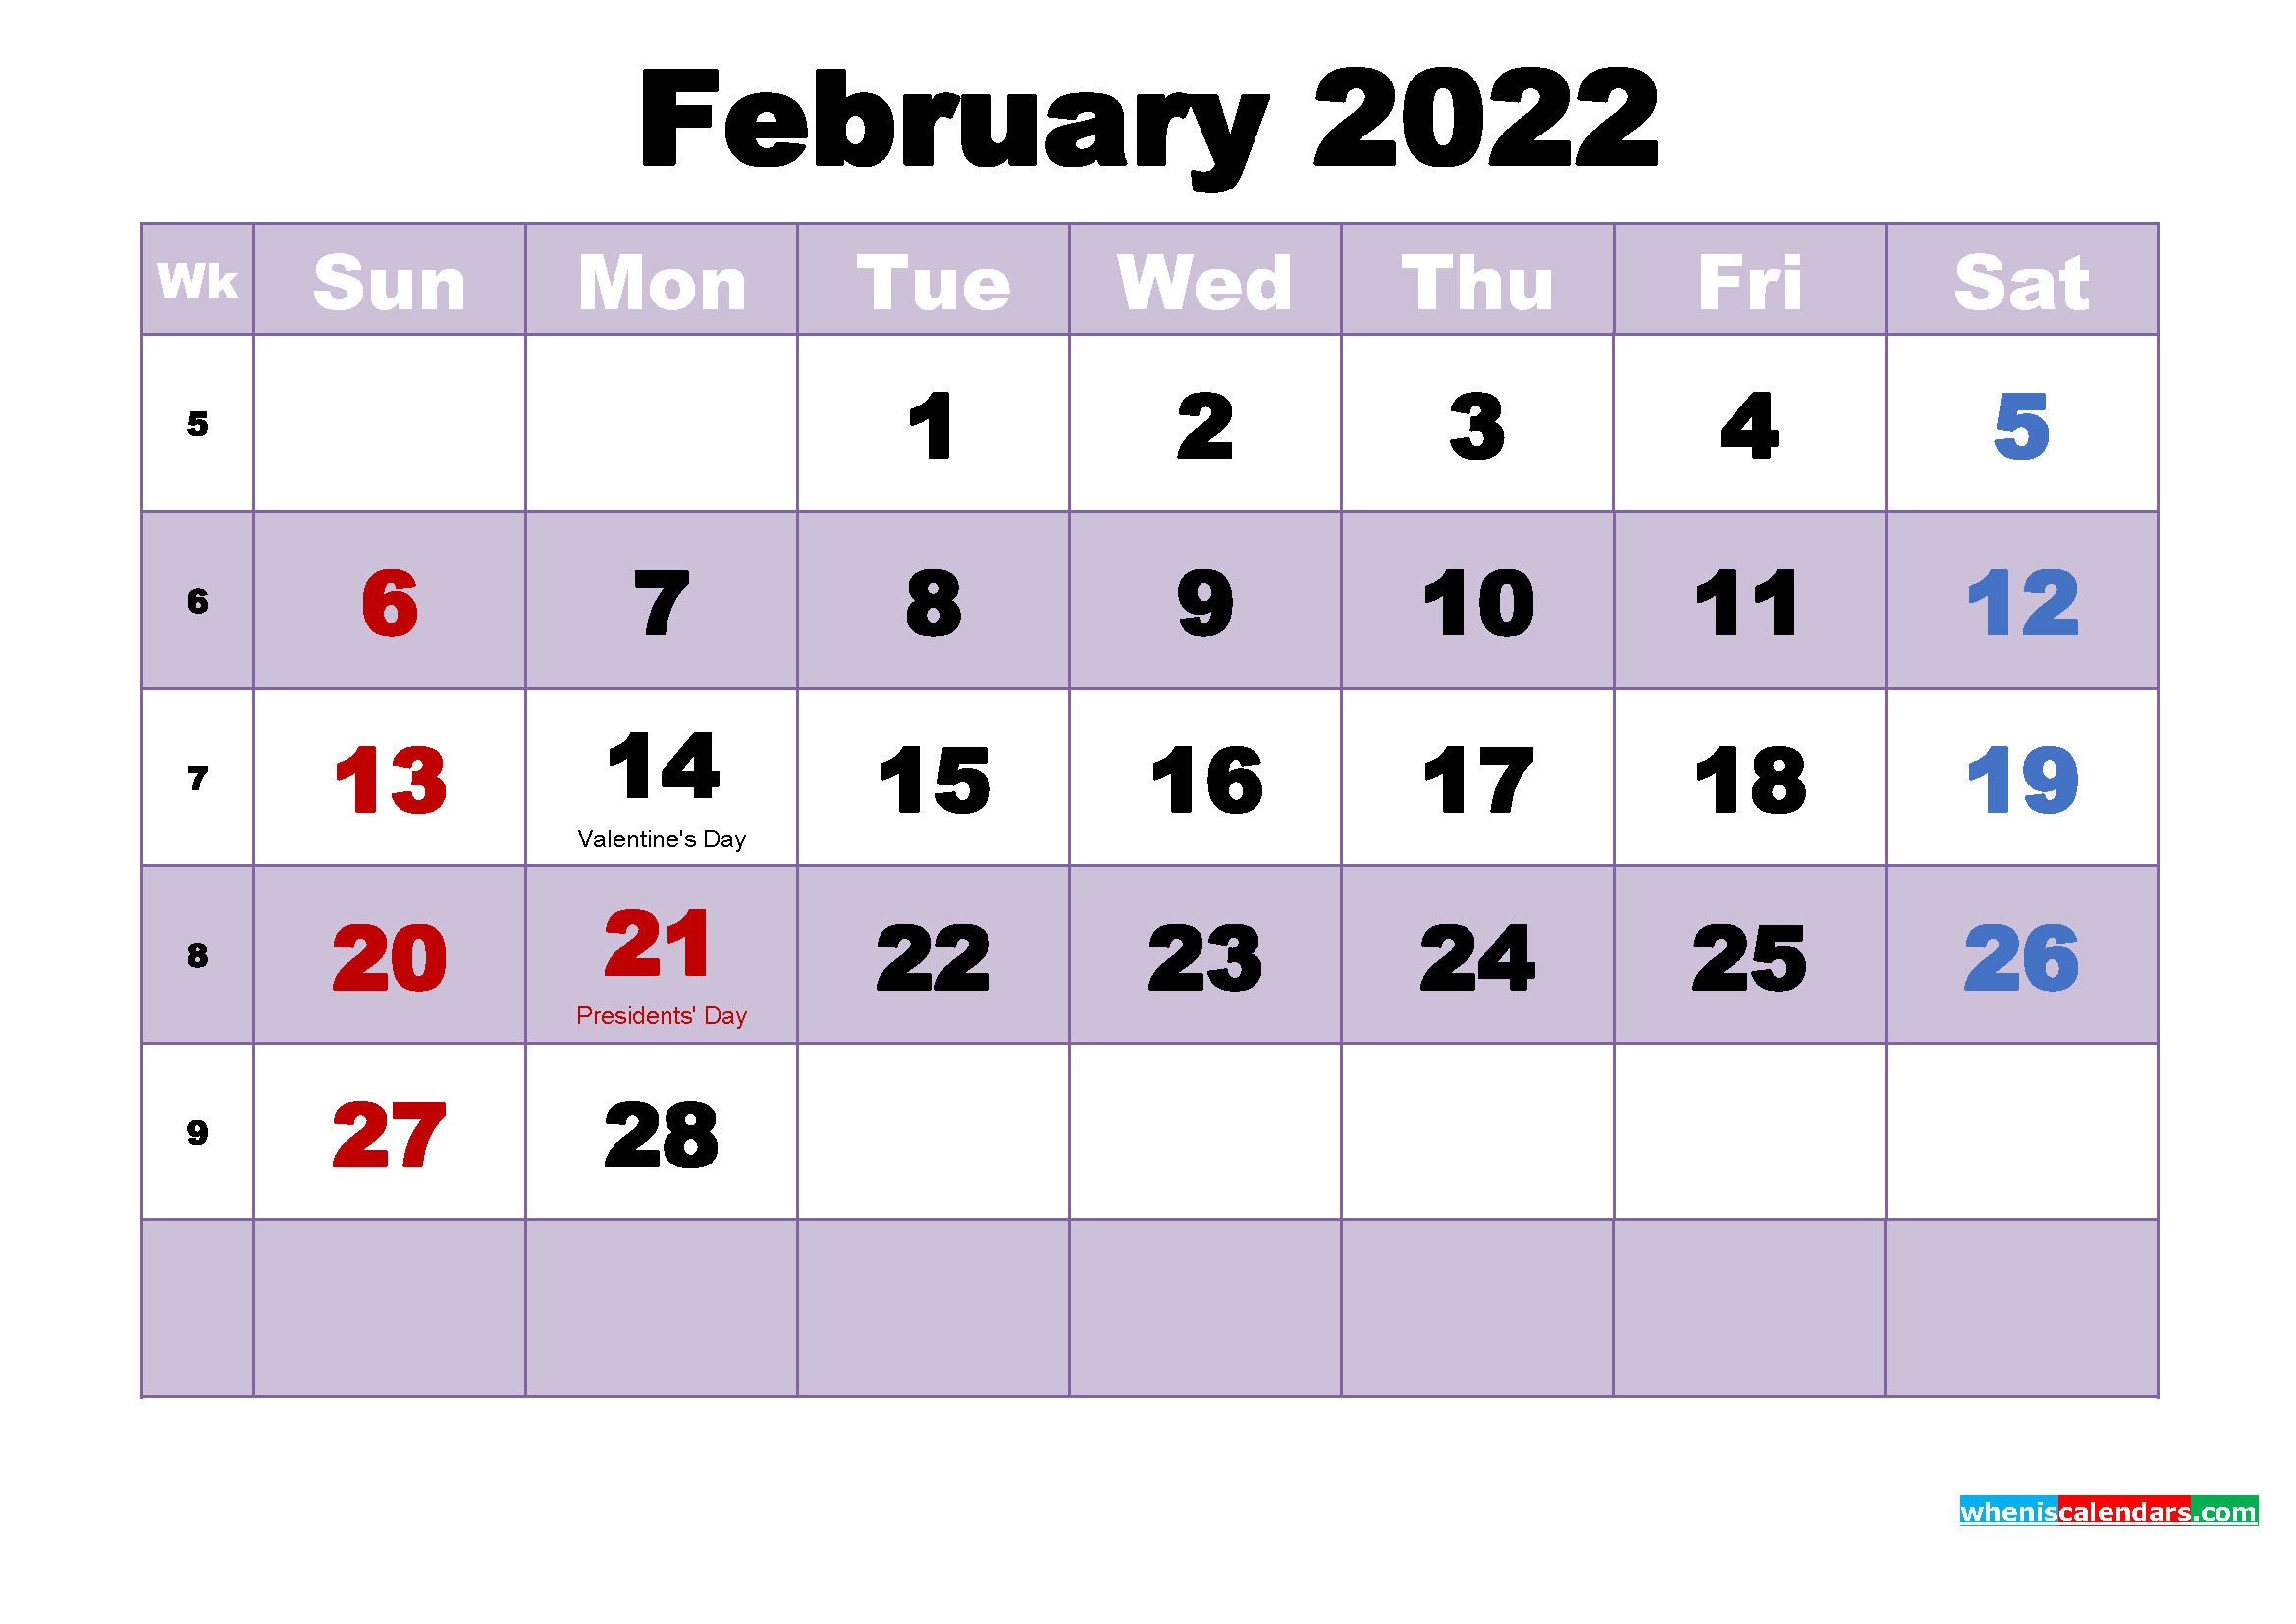 Free 2022 Printable Calendar February as Word, PDF